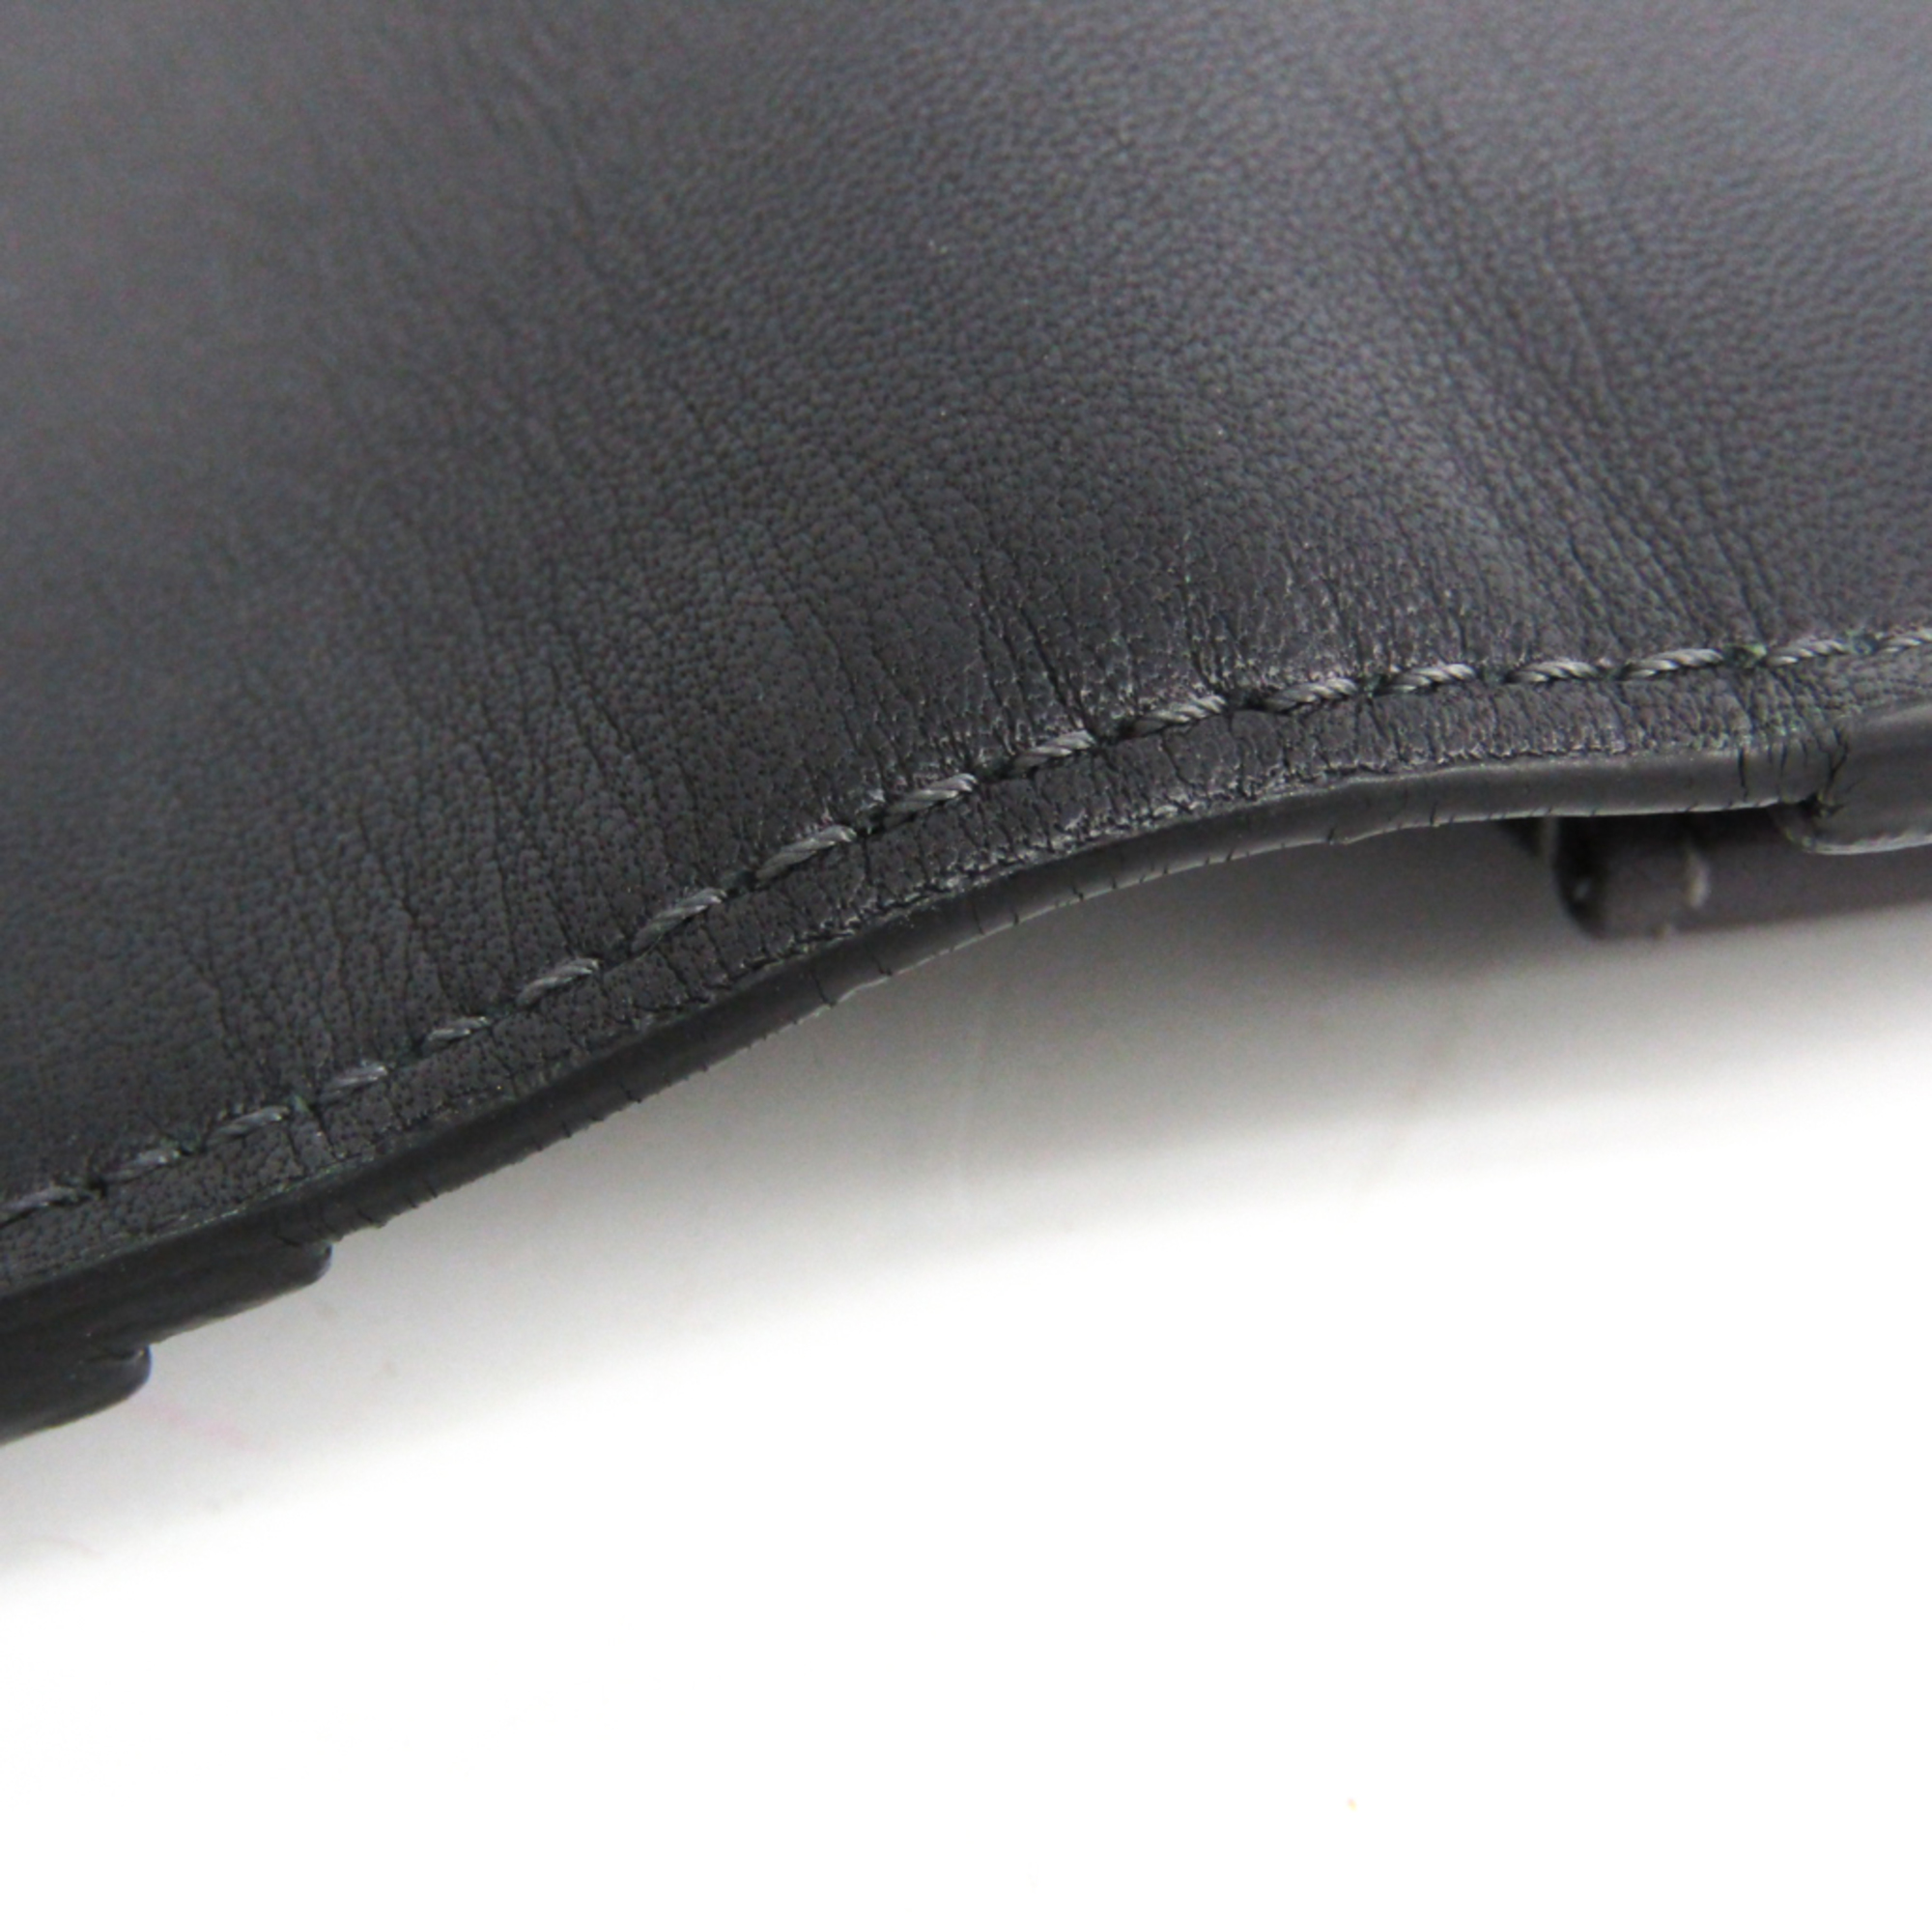 Louis Vuitton Ombre Brazza Wallet M61196 Men's Cuir Ombre Leather Long Wallet (bi-fold) LV Charcoal